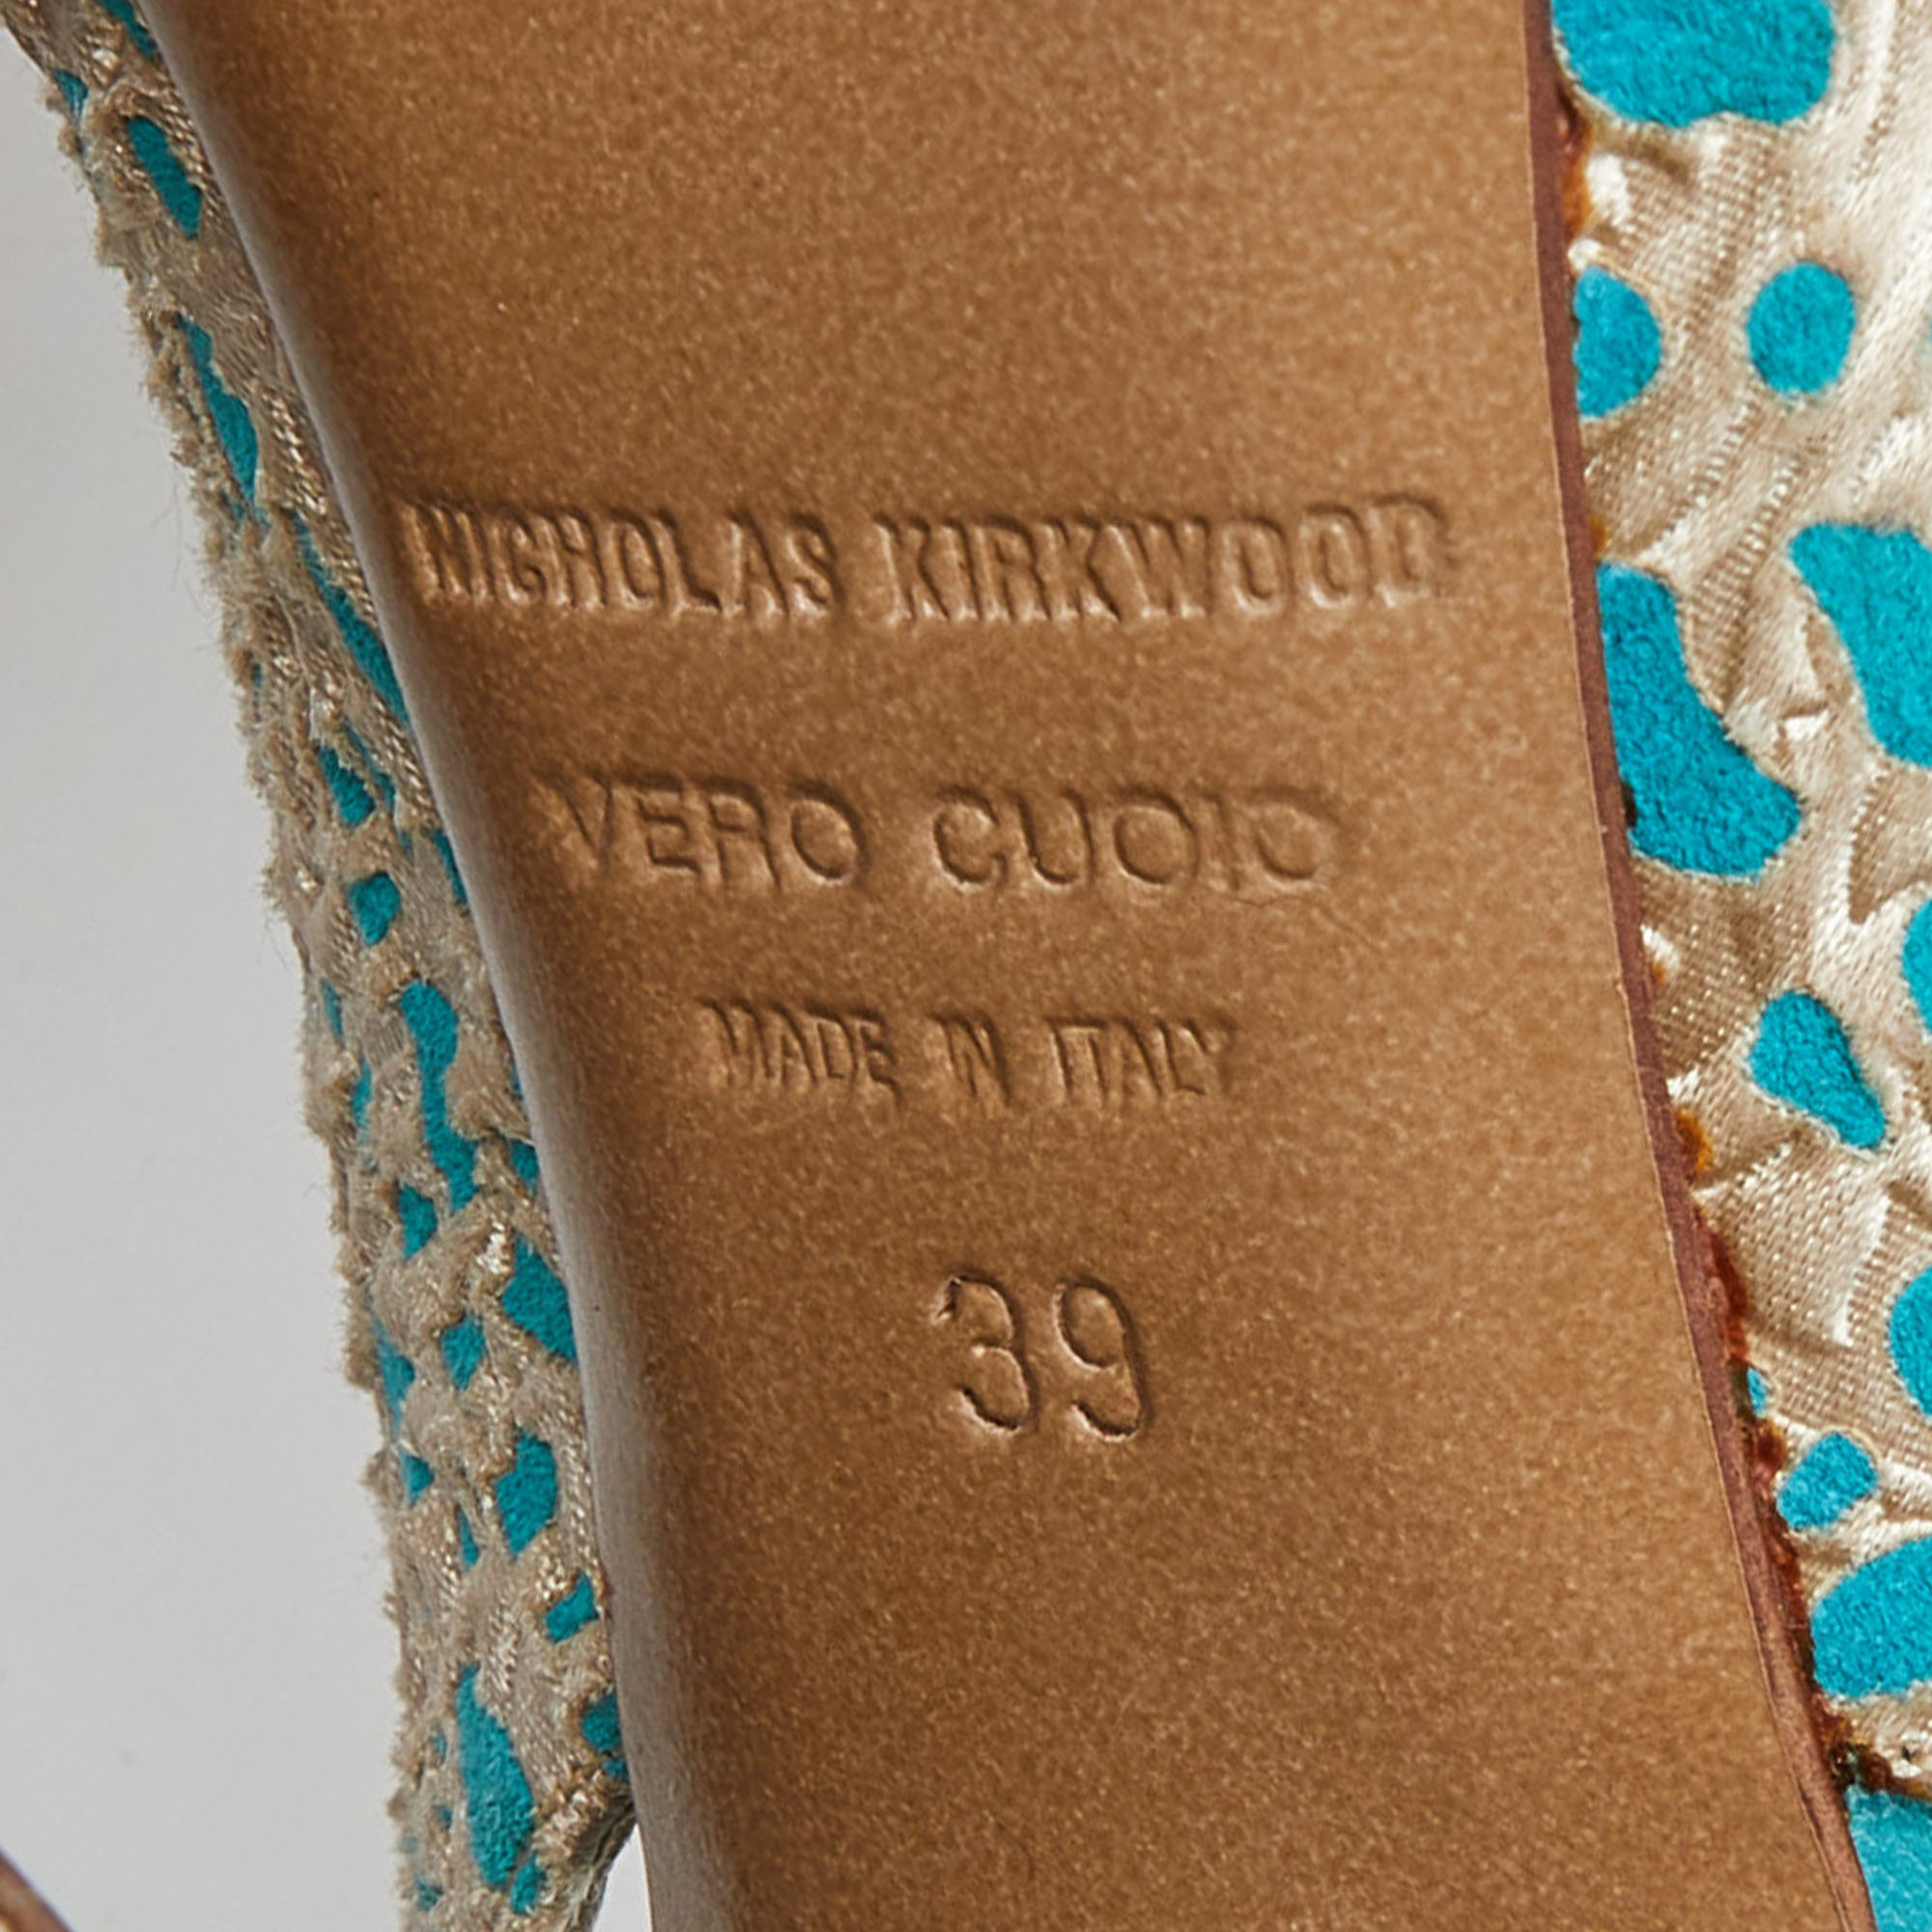 Nicholas Kirkwood Blue/White Textured Suede Pearl Embellished Slingback Sandals Size 39